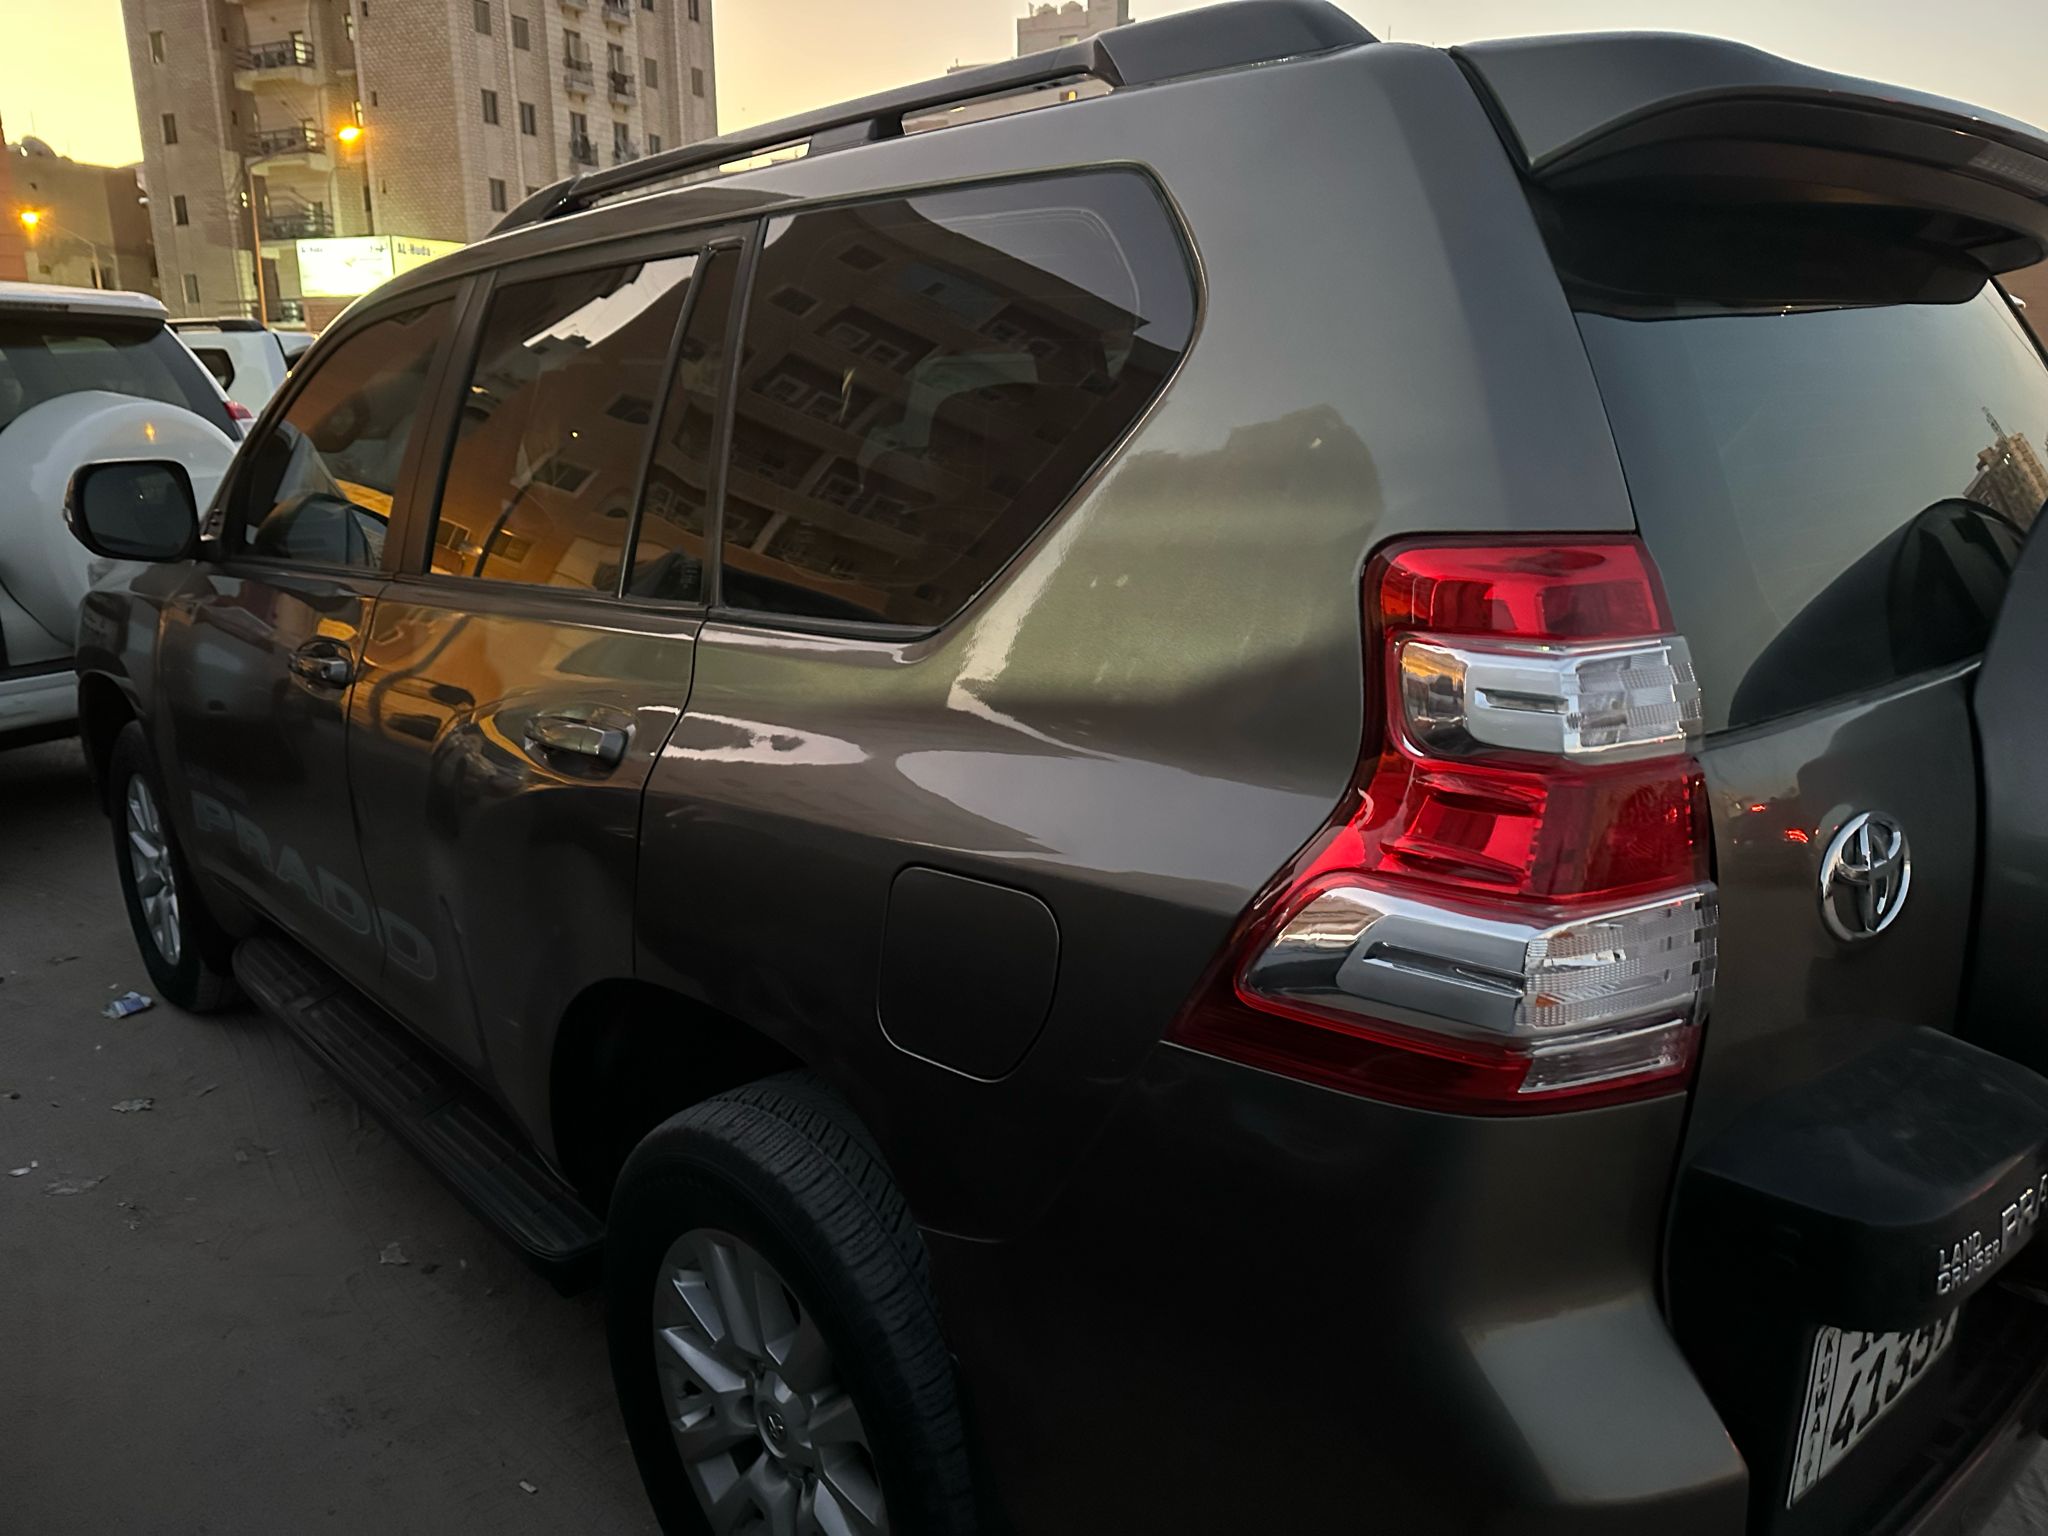 Toyota Prado TX-L 2015 Brown color excellent SUV for sale.